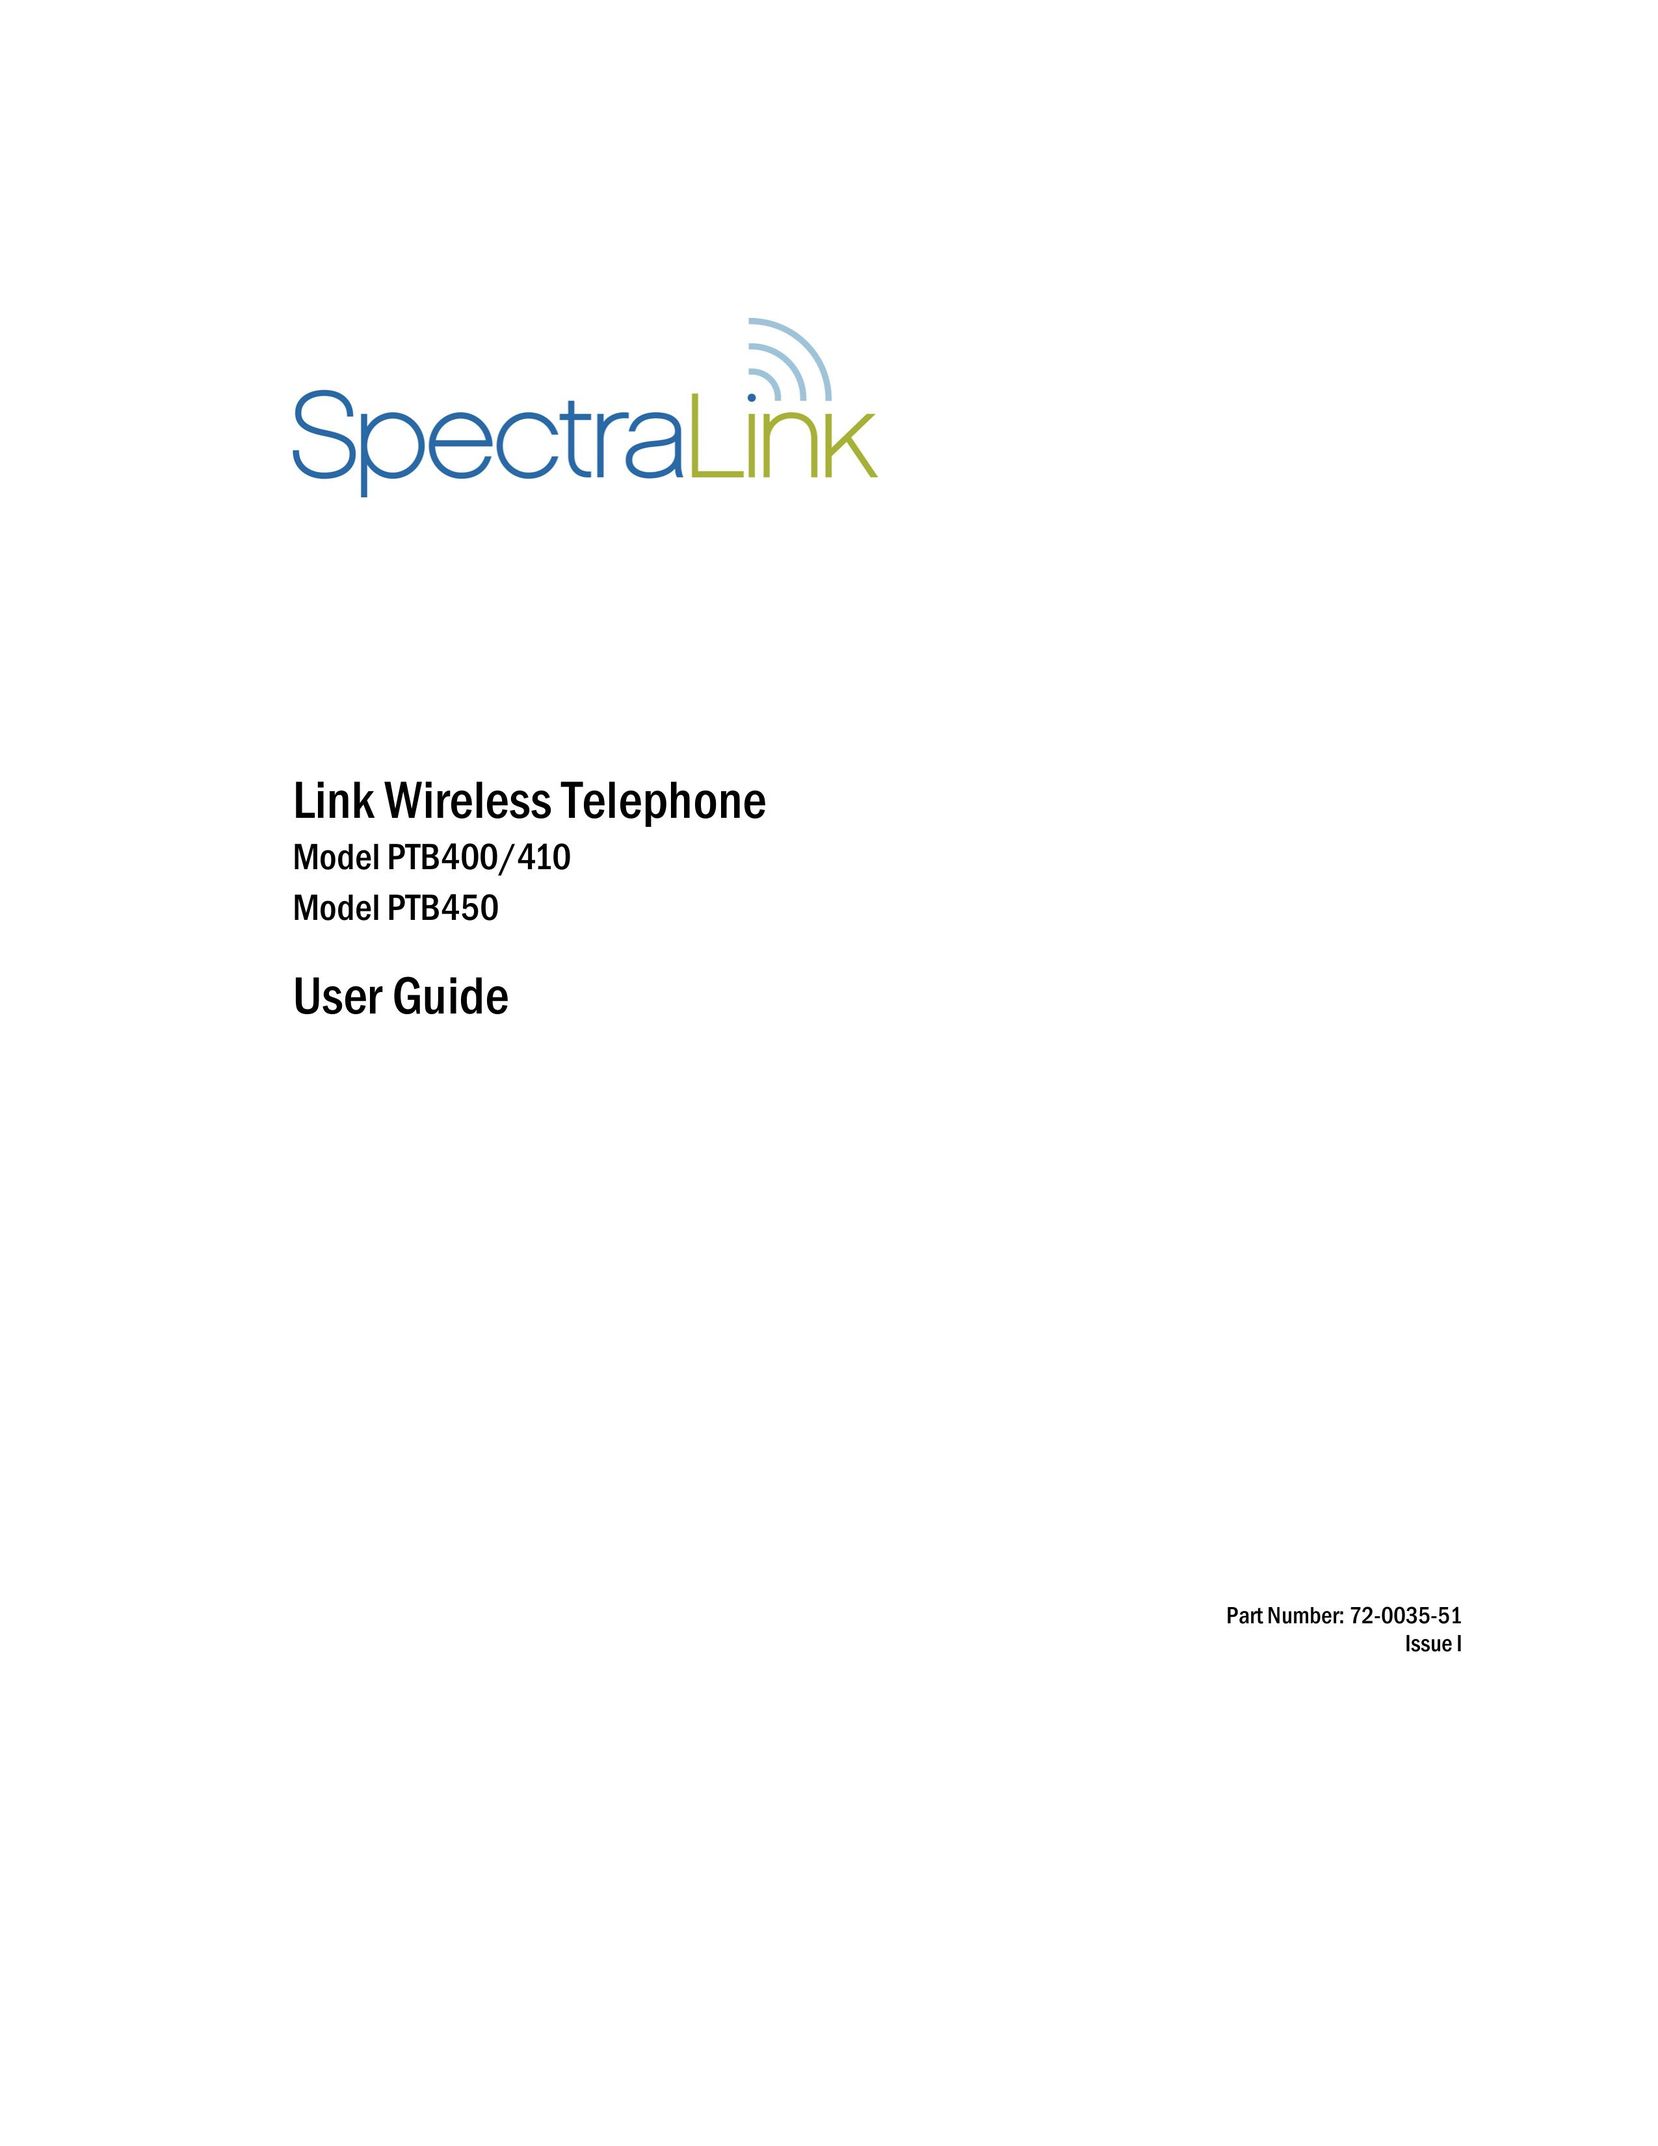 SpectraLink PTB400 Telephone User Manual